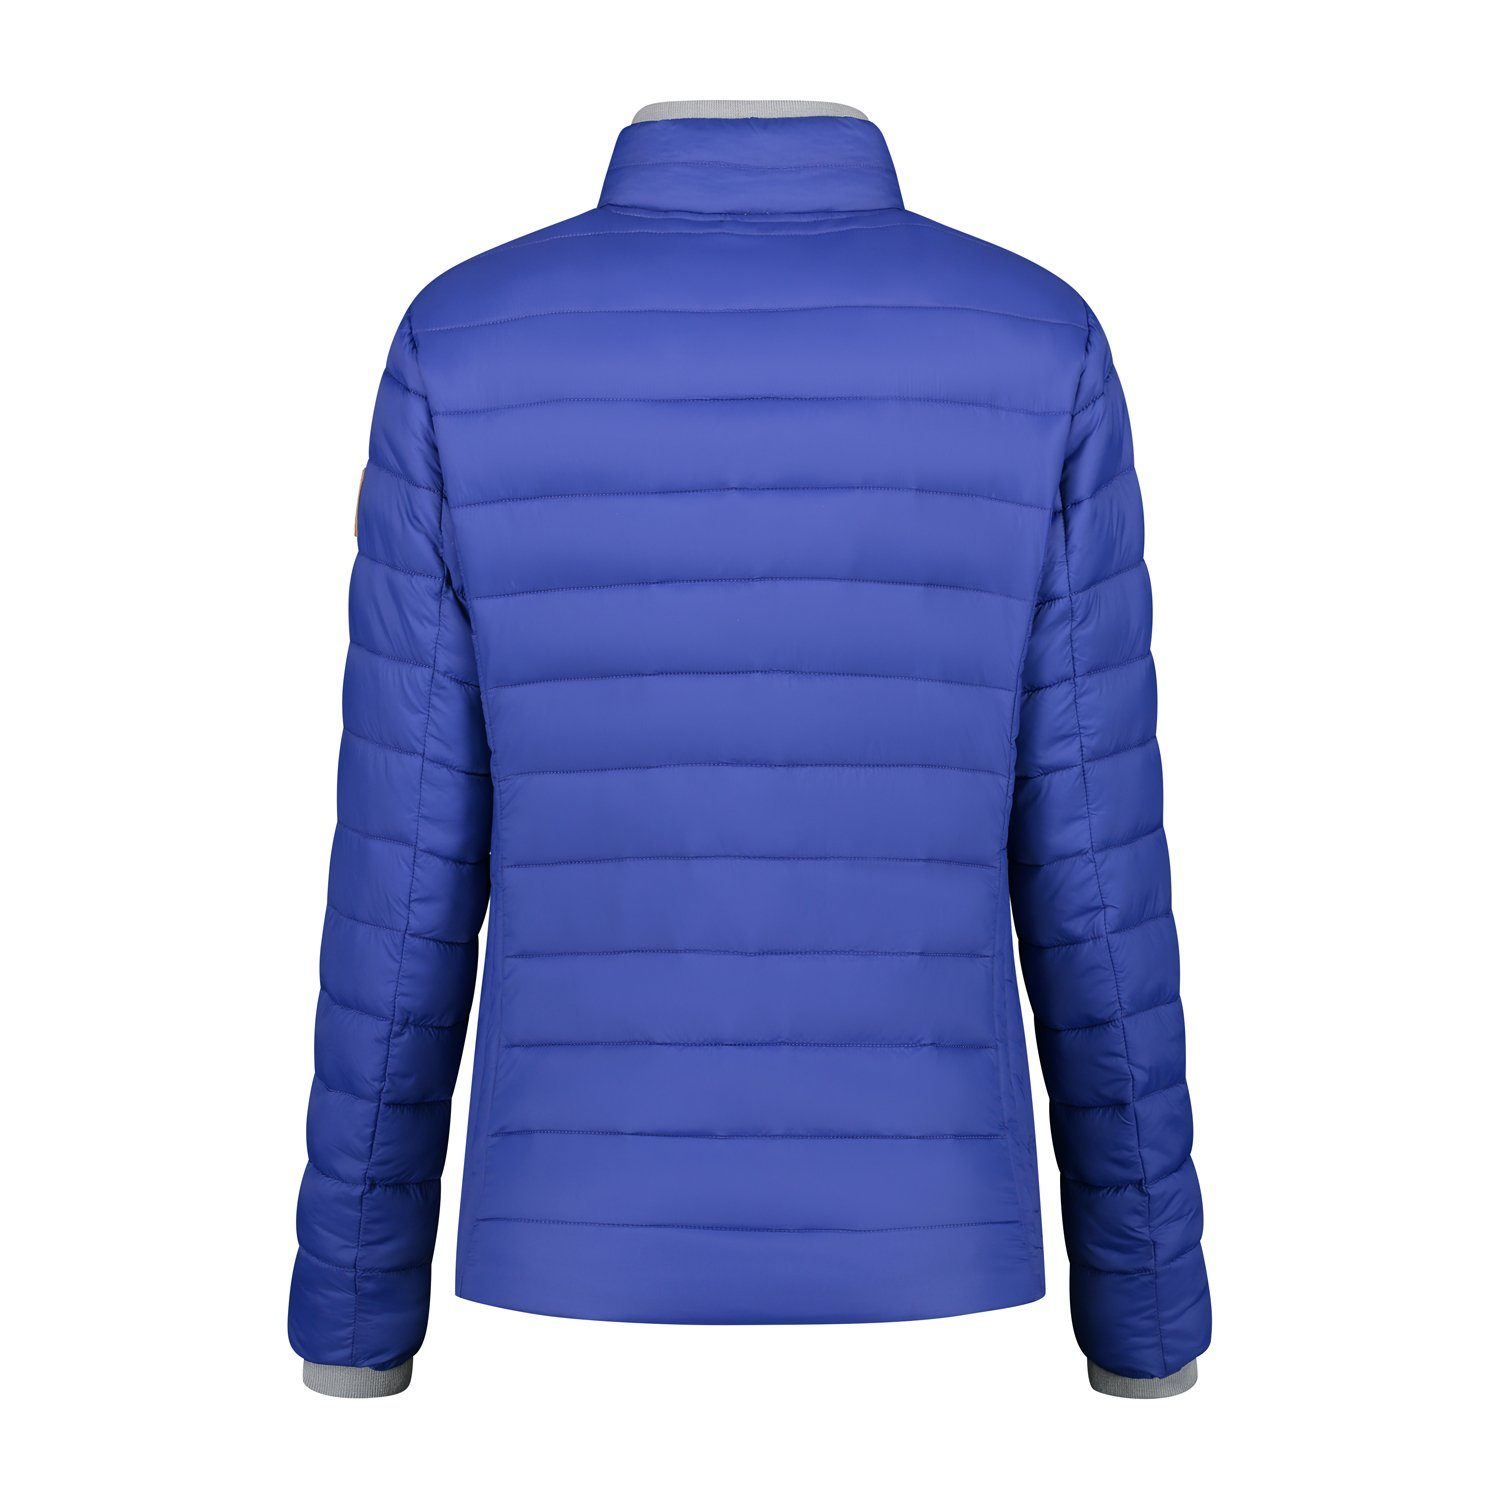 MGO Outdoorjacke Blau Jacket Maggie winddicht